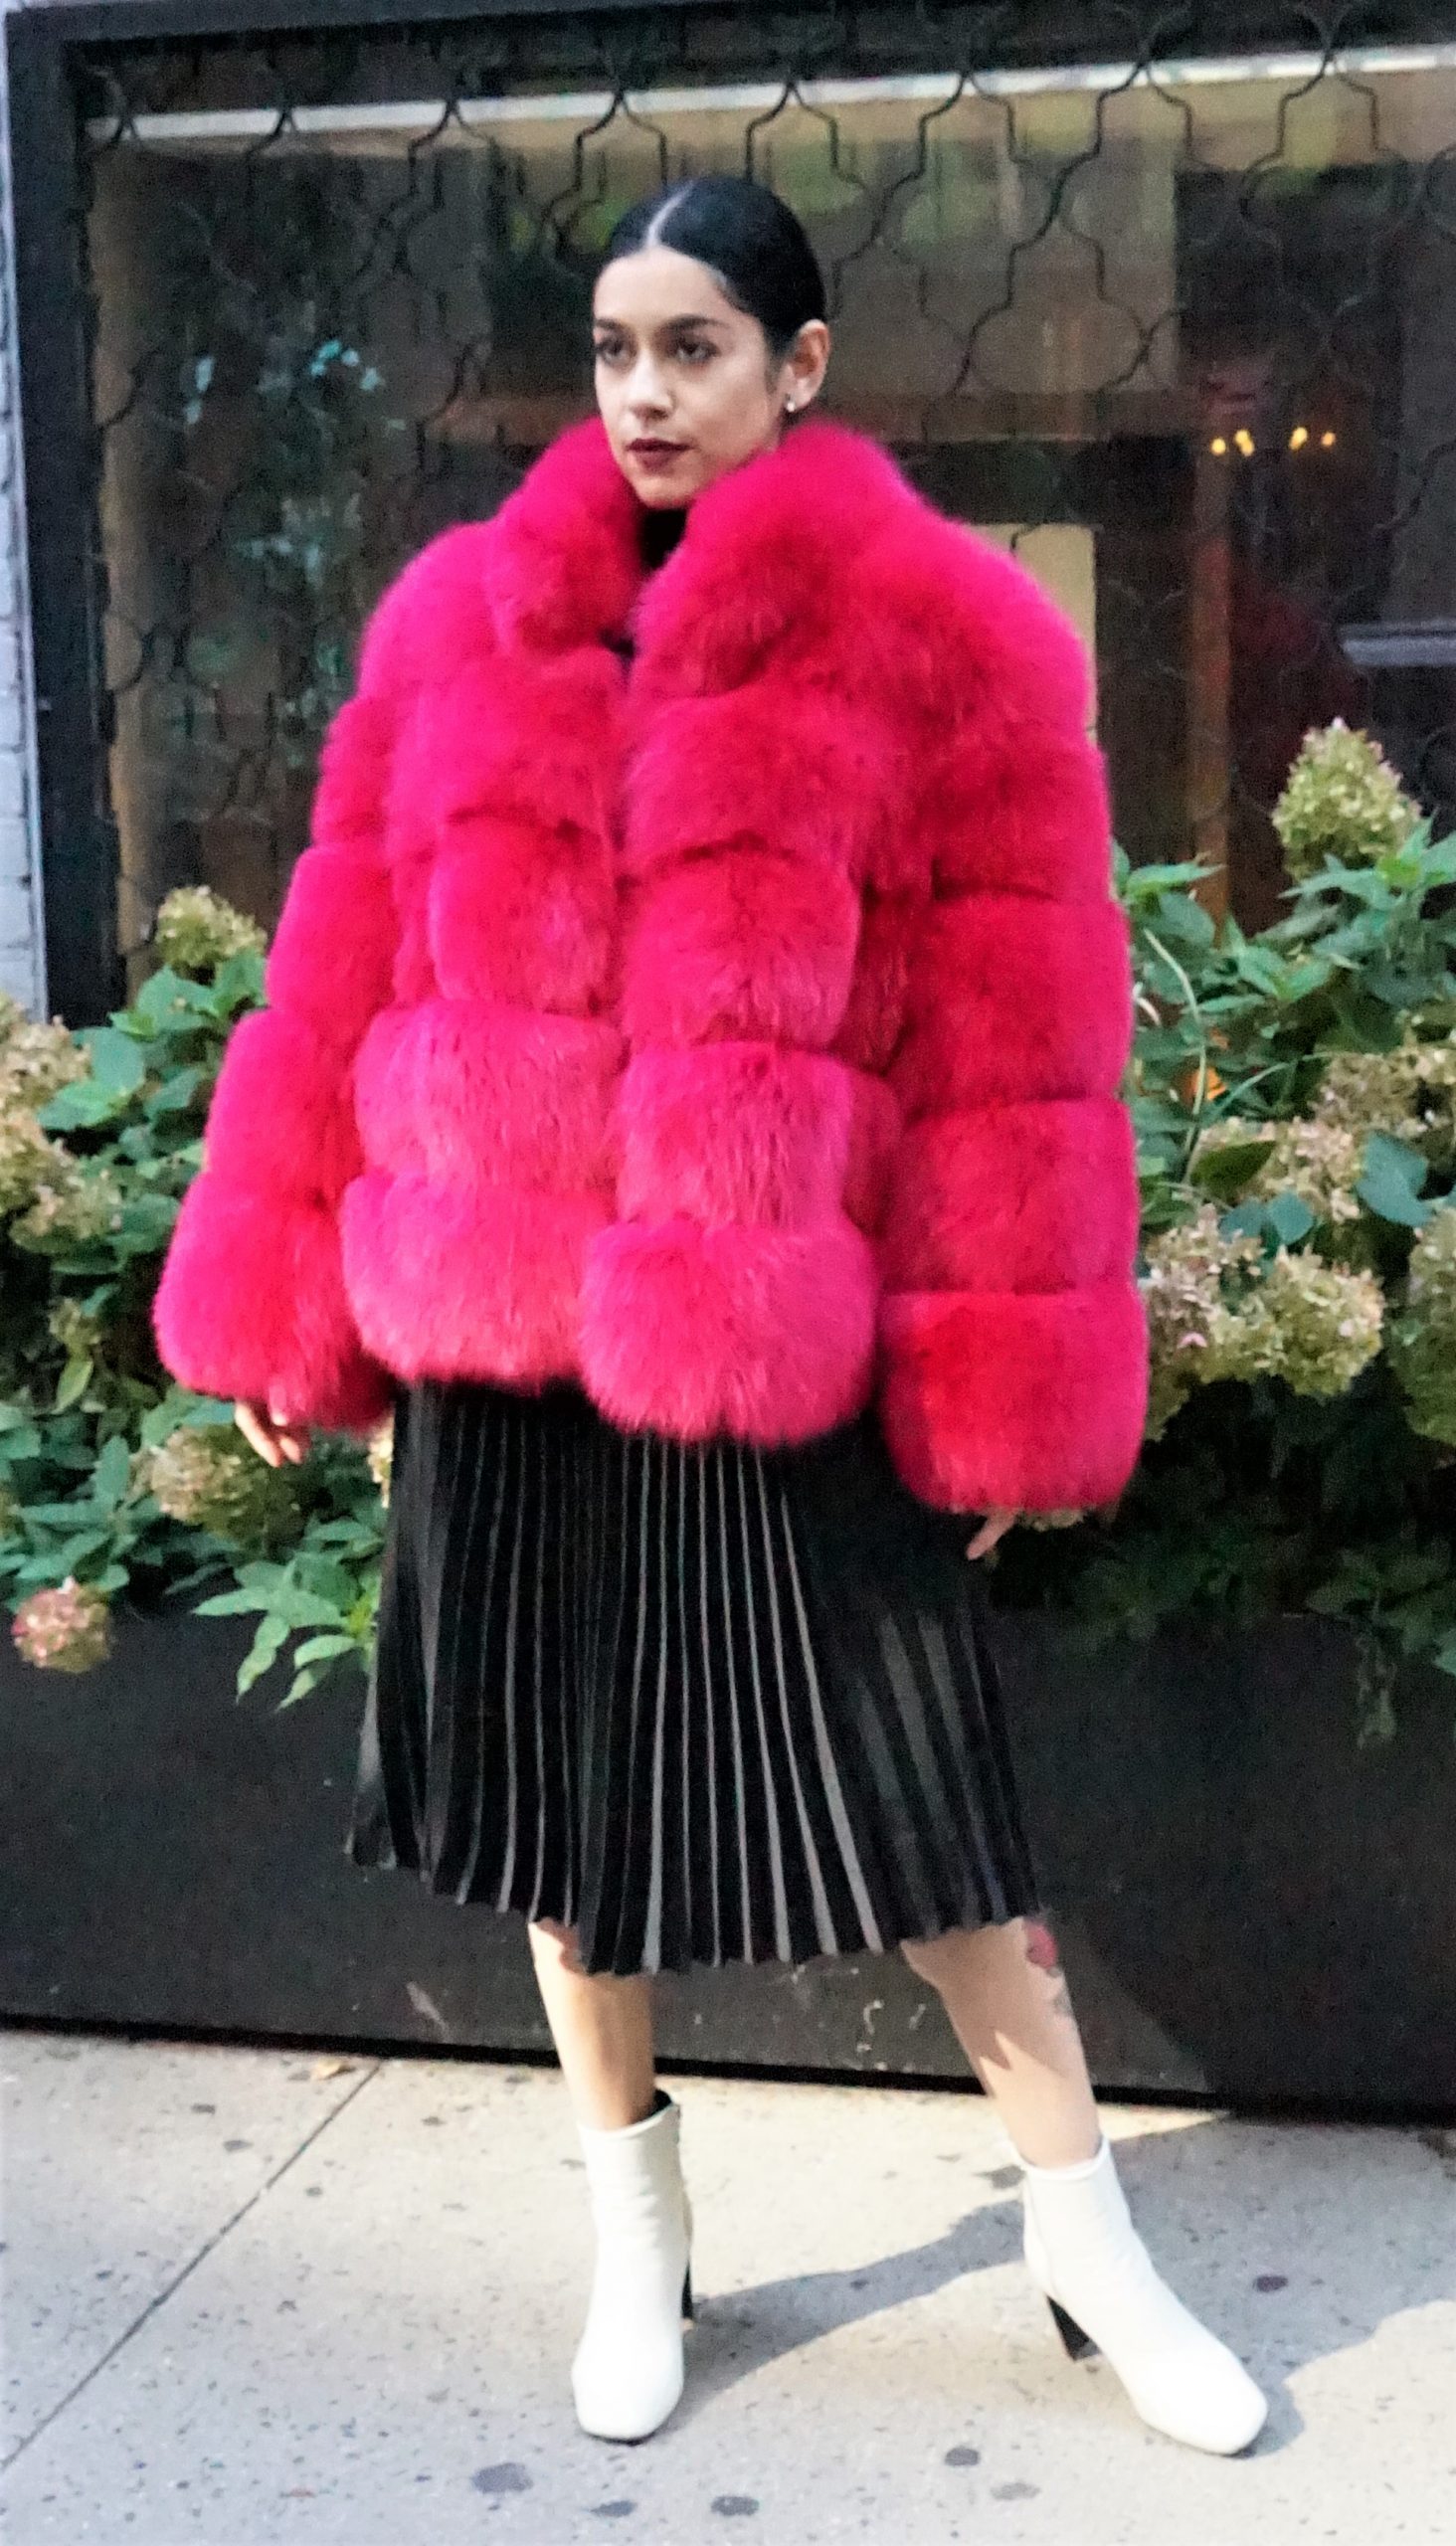 fur coats for women